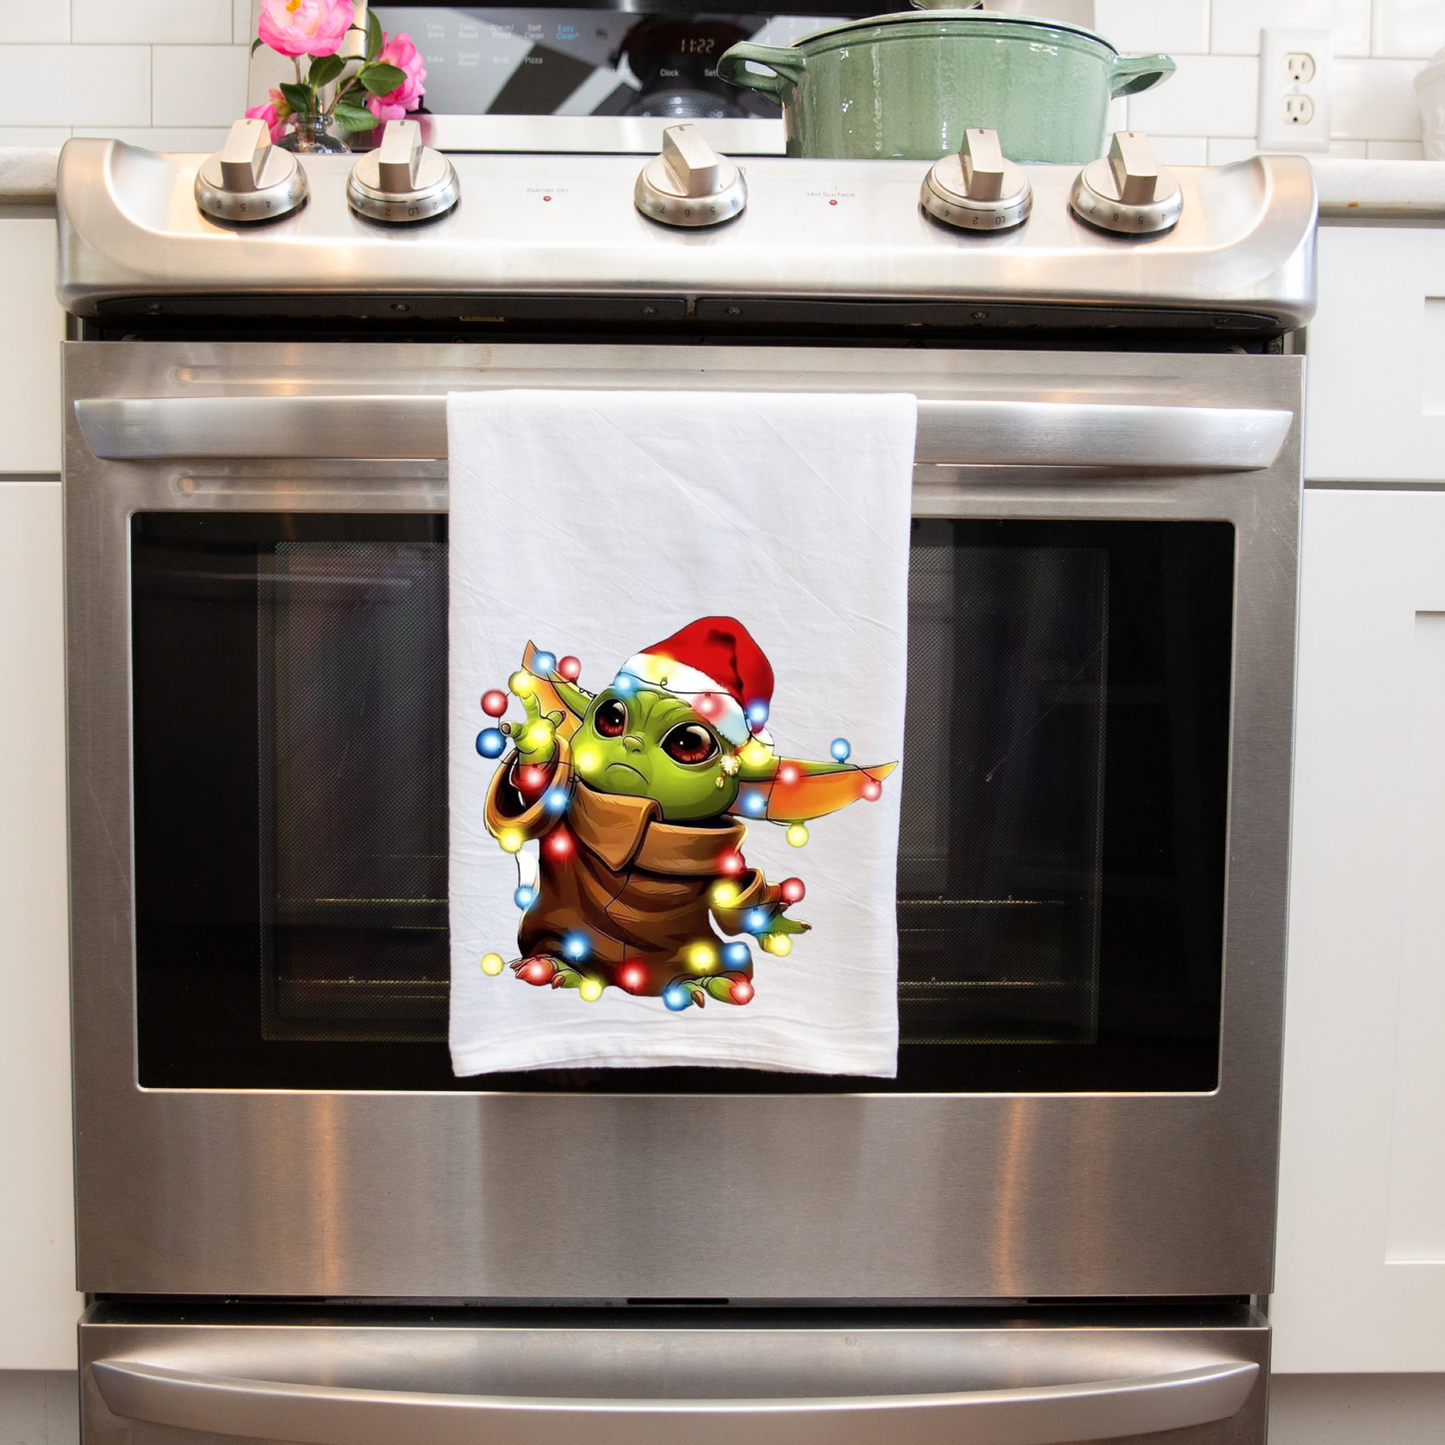 Handmade Sublimated Baby Yoda Christmas Kitchen Tea Towel | Festive Star Wars Decor